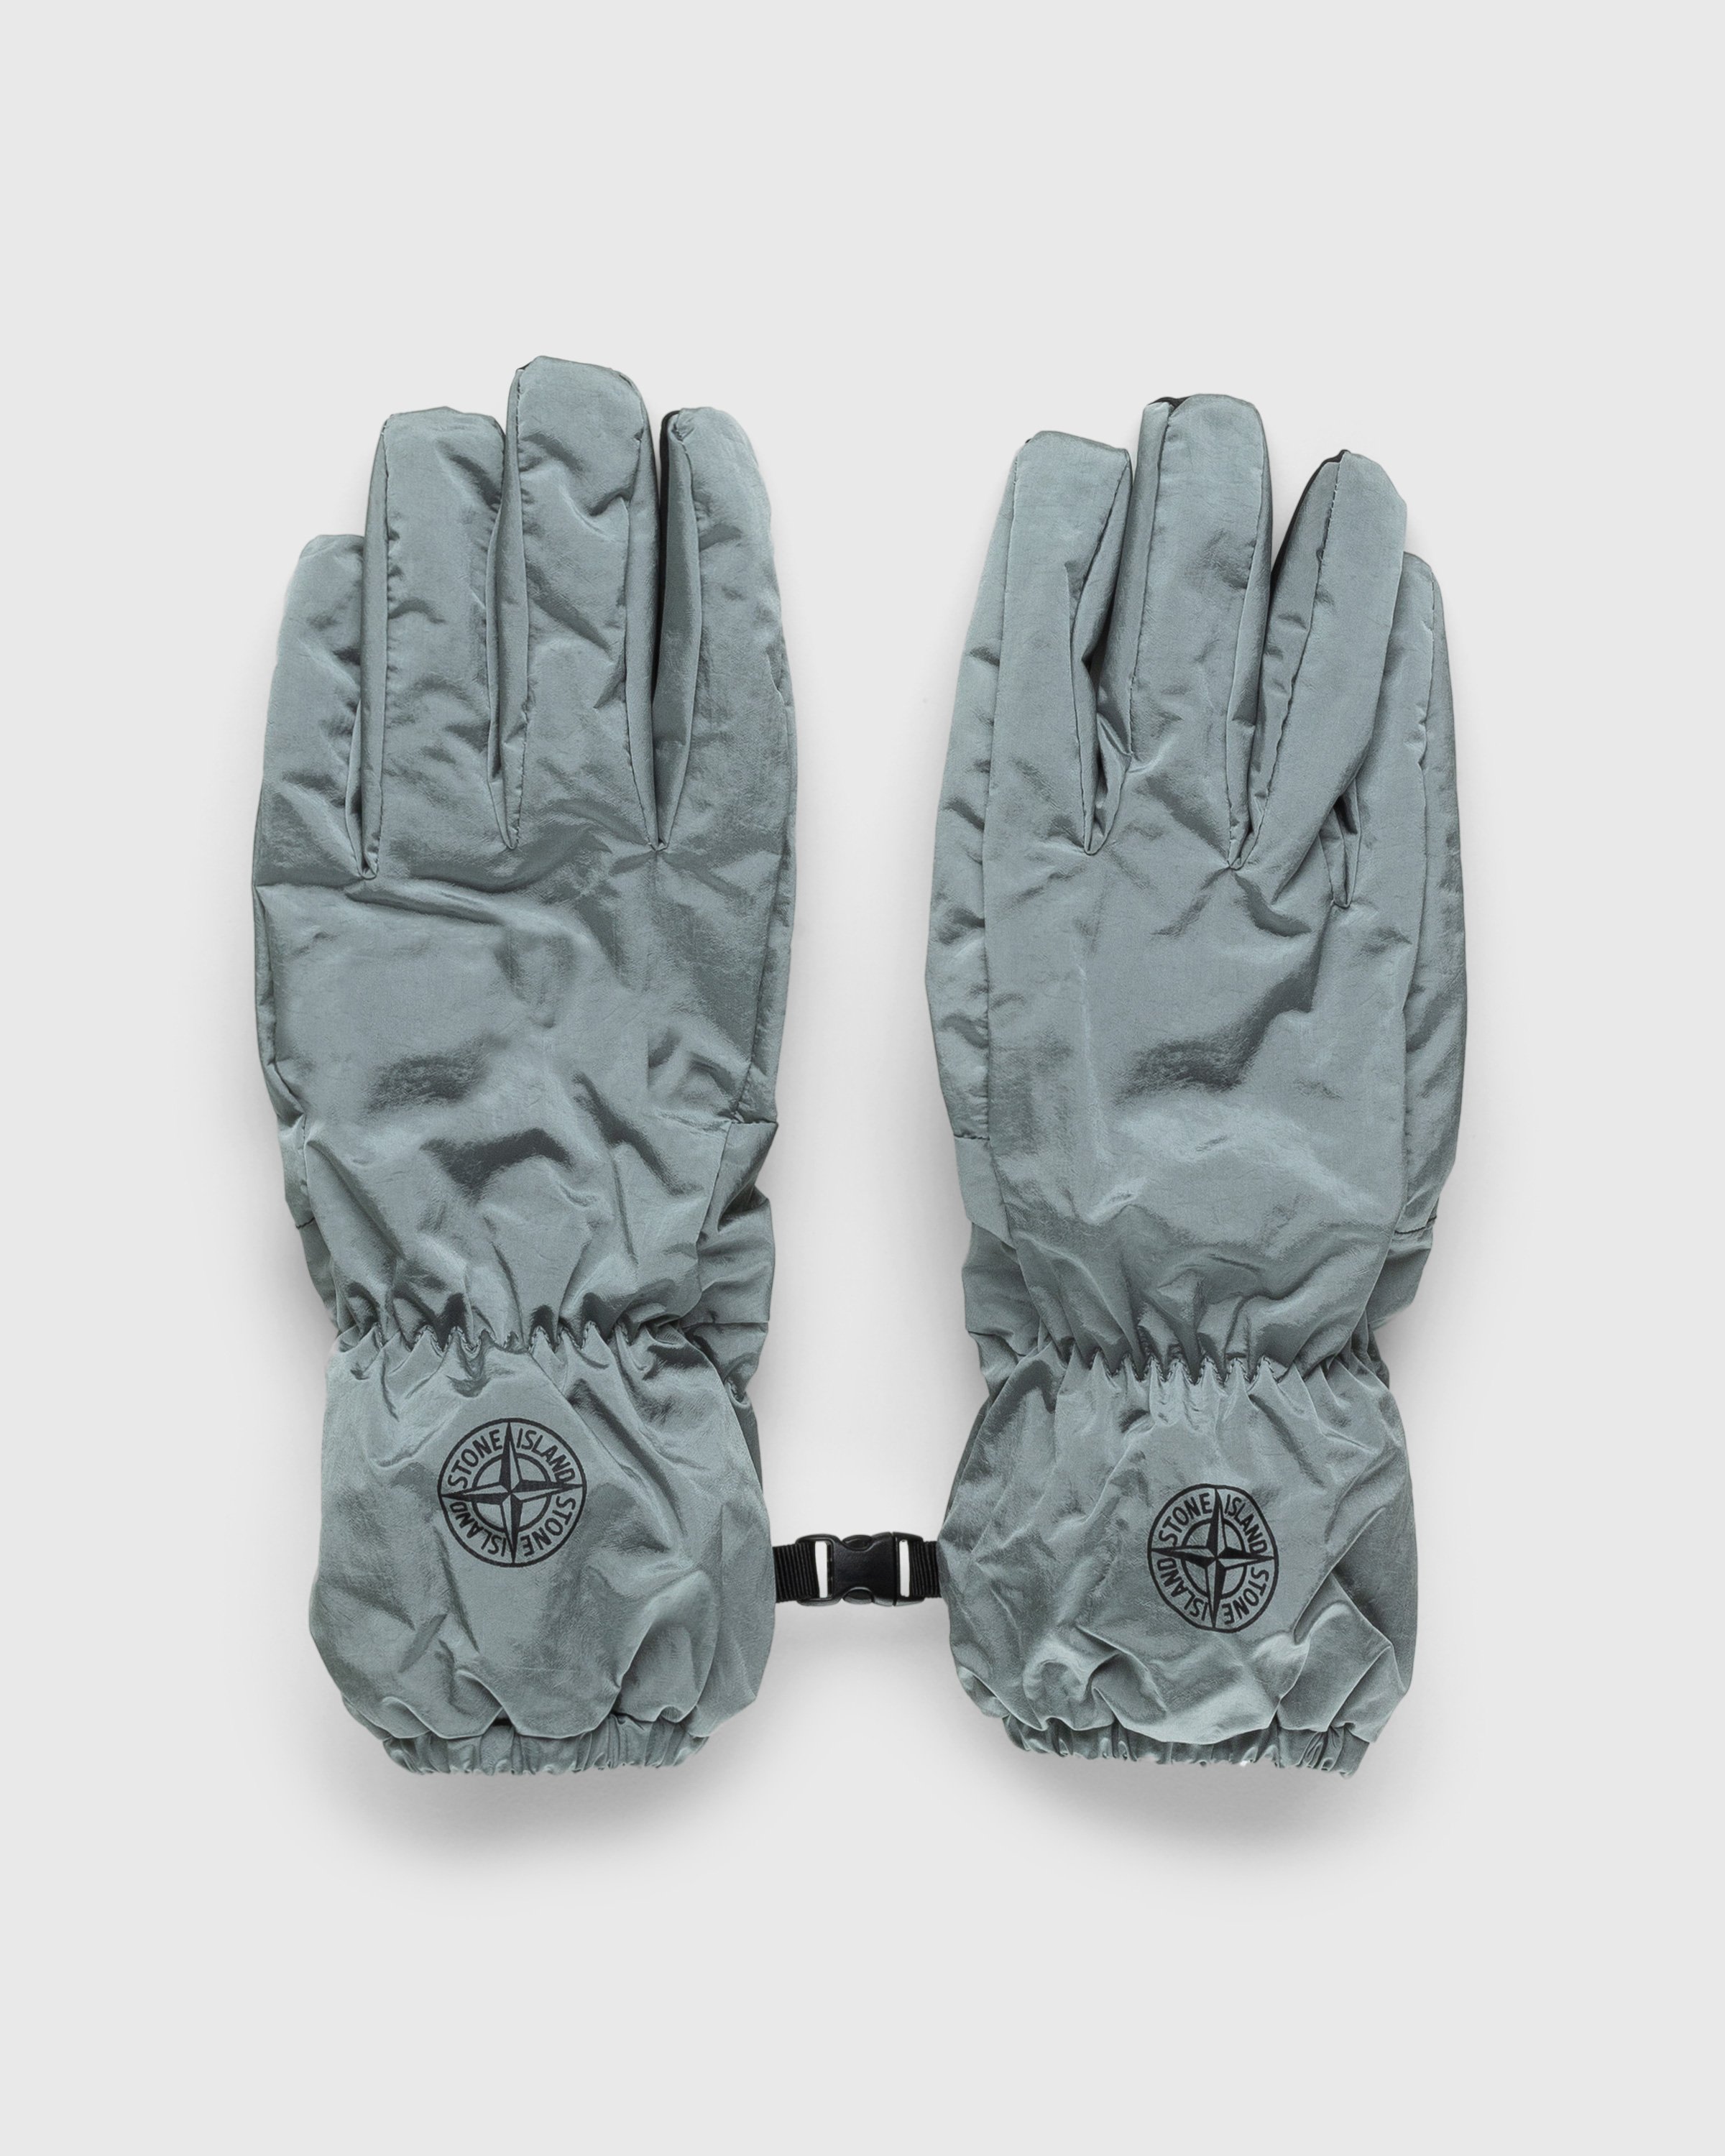 Stone Island - Nylon Metal Gloves Aqua - Accessories - Blue - Image 1